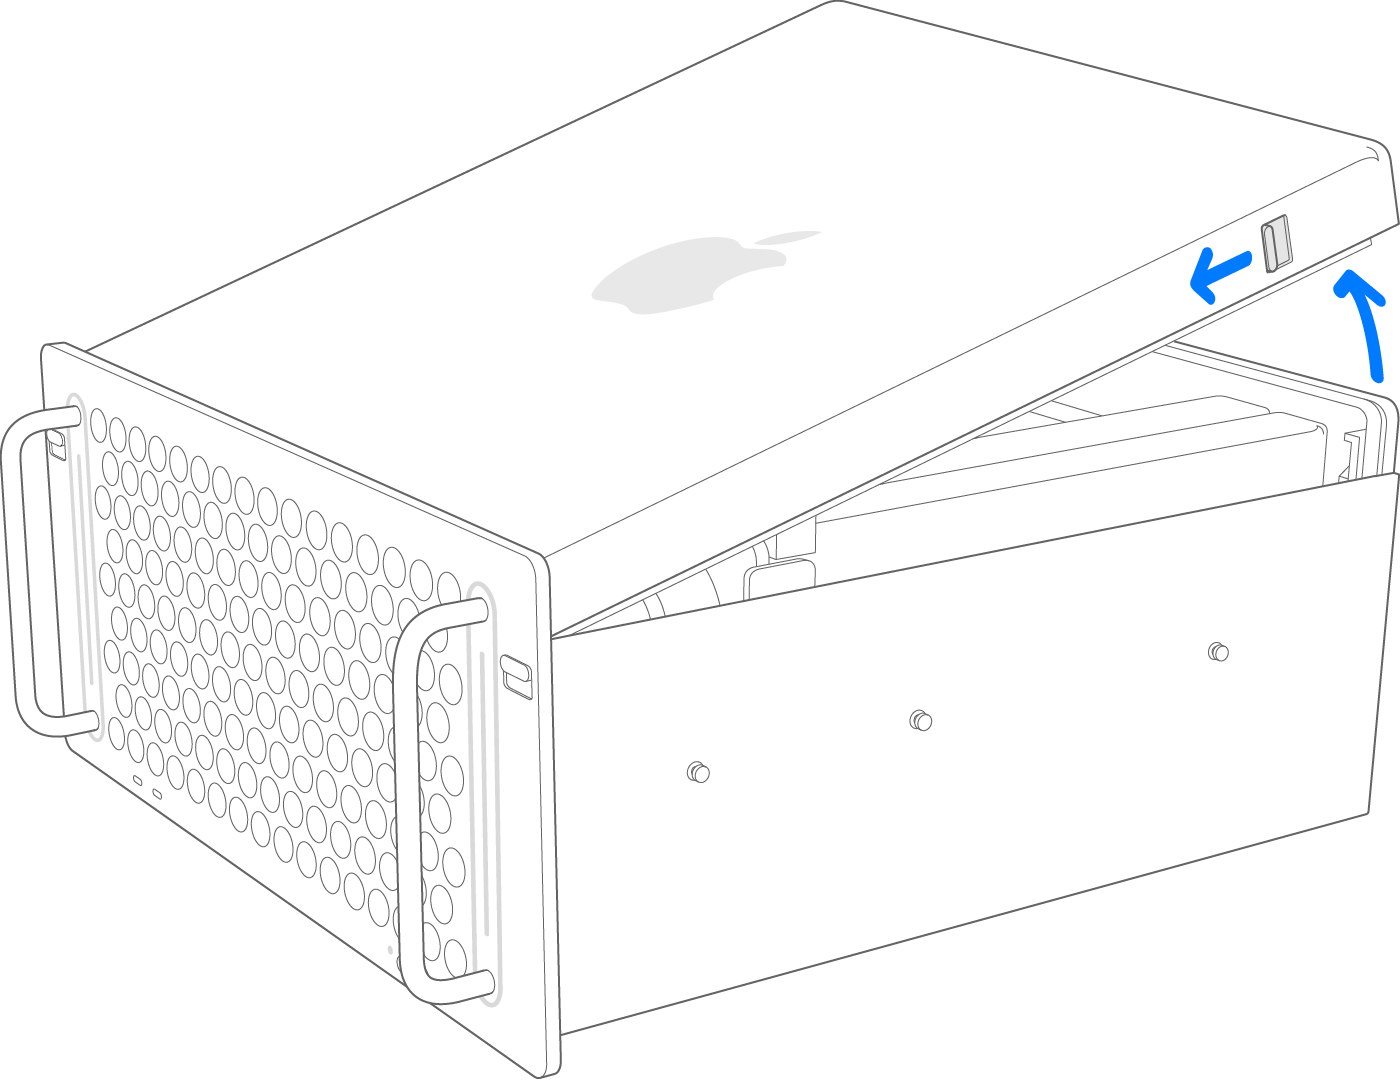 2019-mac-pro-diagram-rack-remove-top-cover